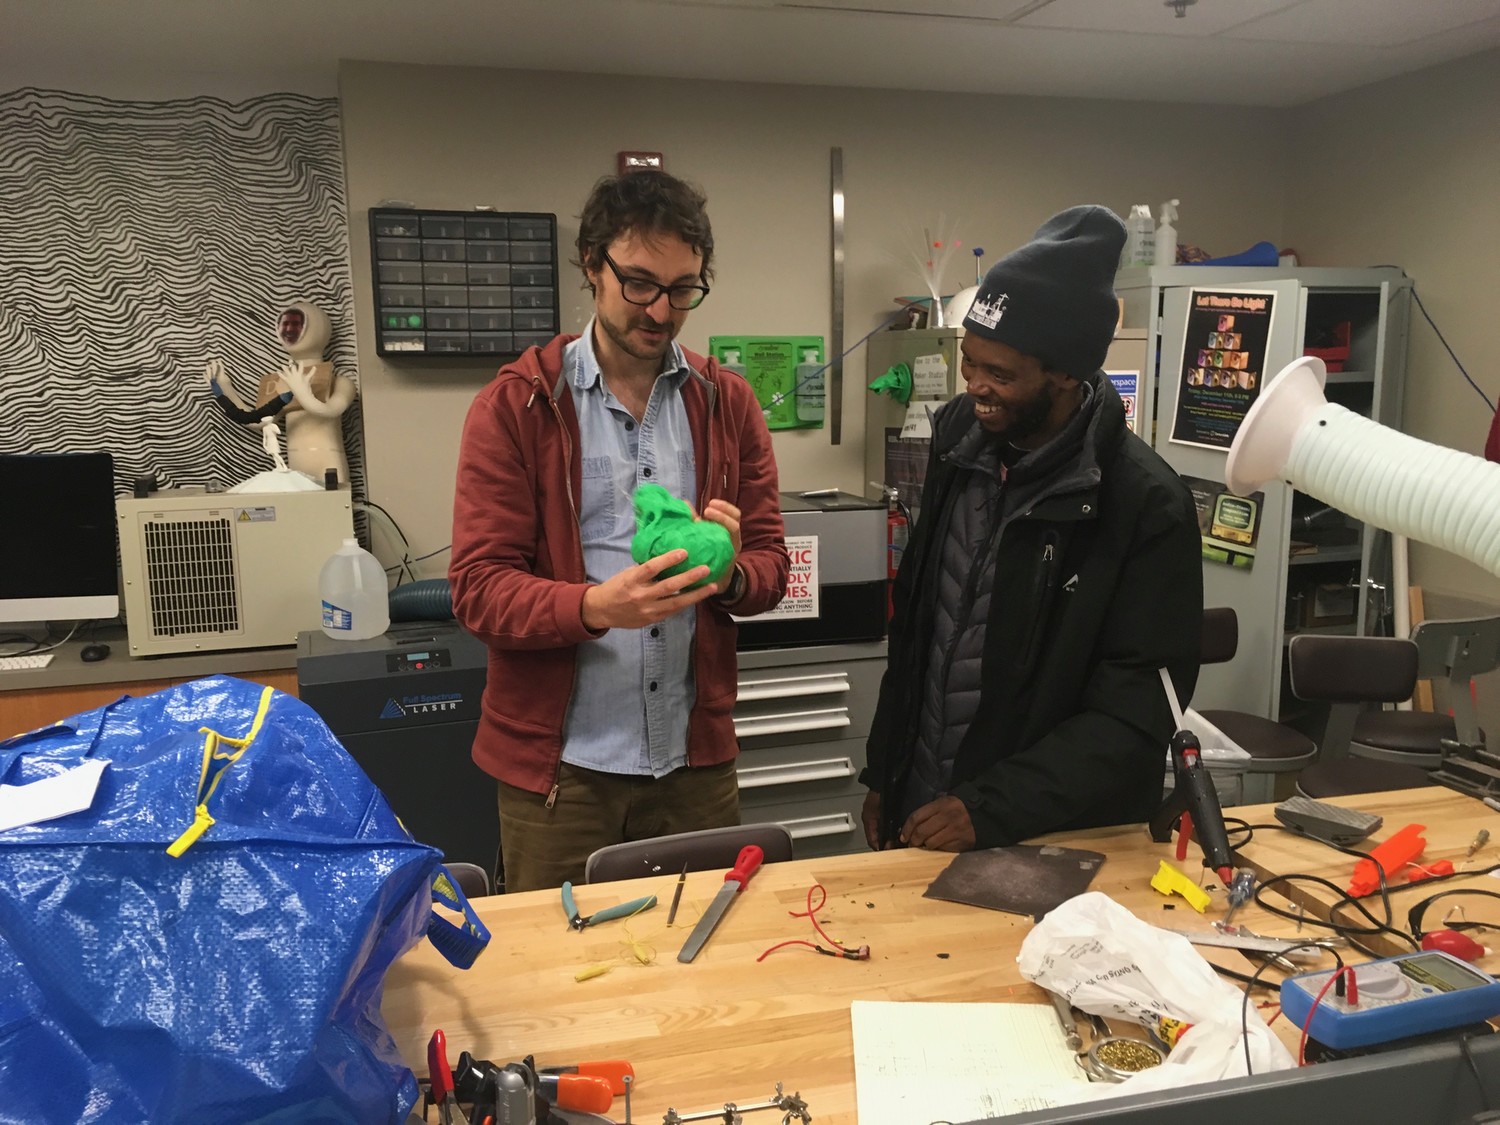 X with Jason Bennett (Learning, Design, Technology) in the Maker Studio, Wilson Hall